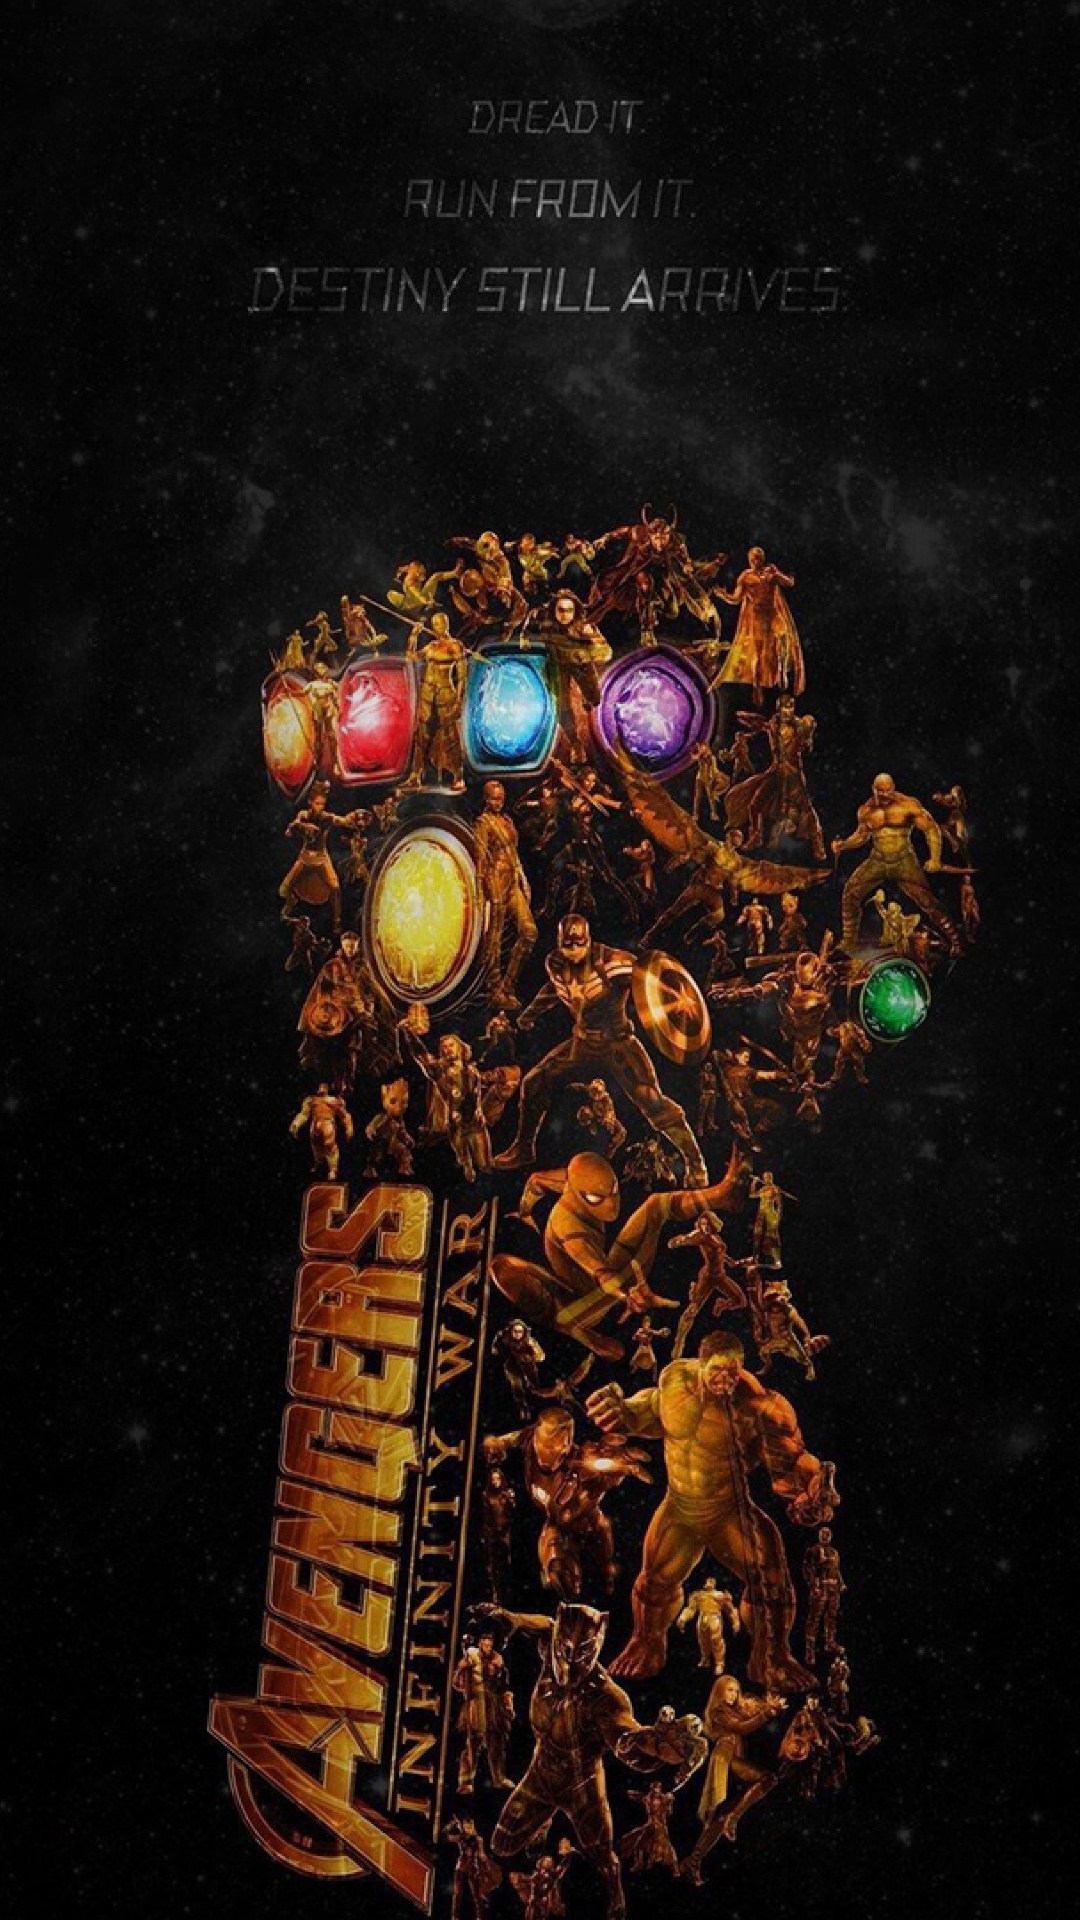 Fan Made Infinity War Poster - HD Wallpaper 